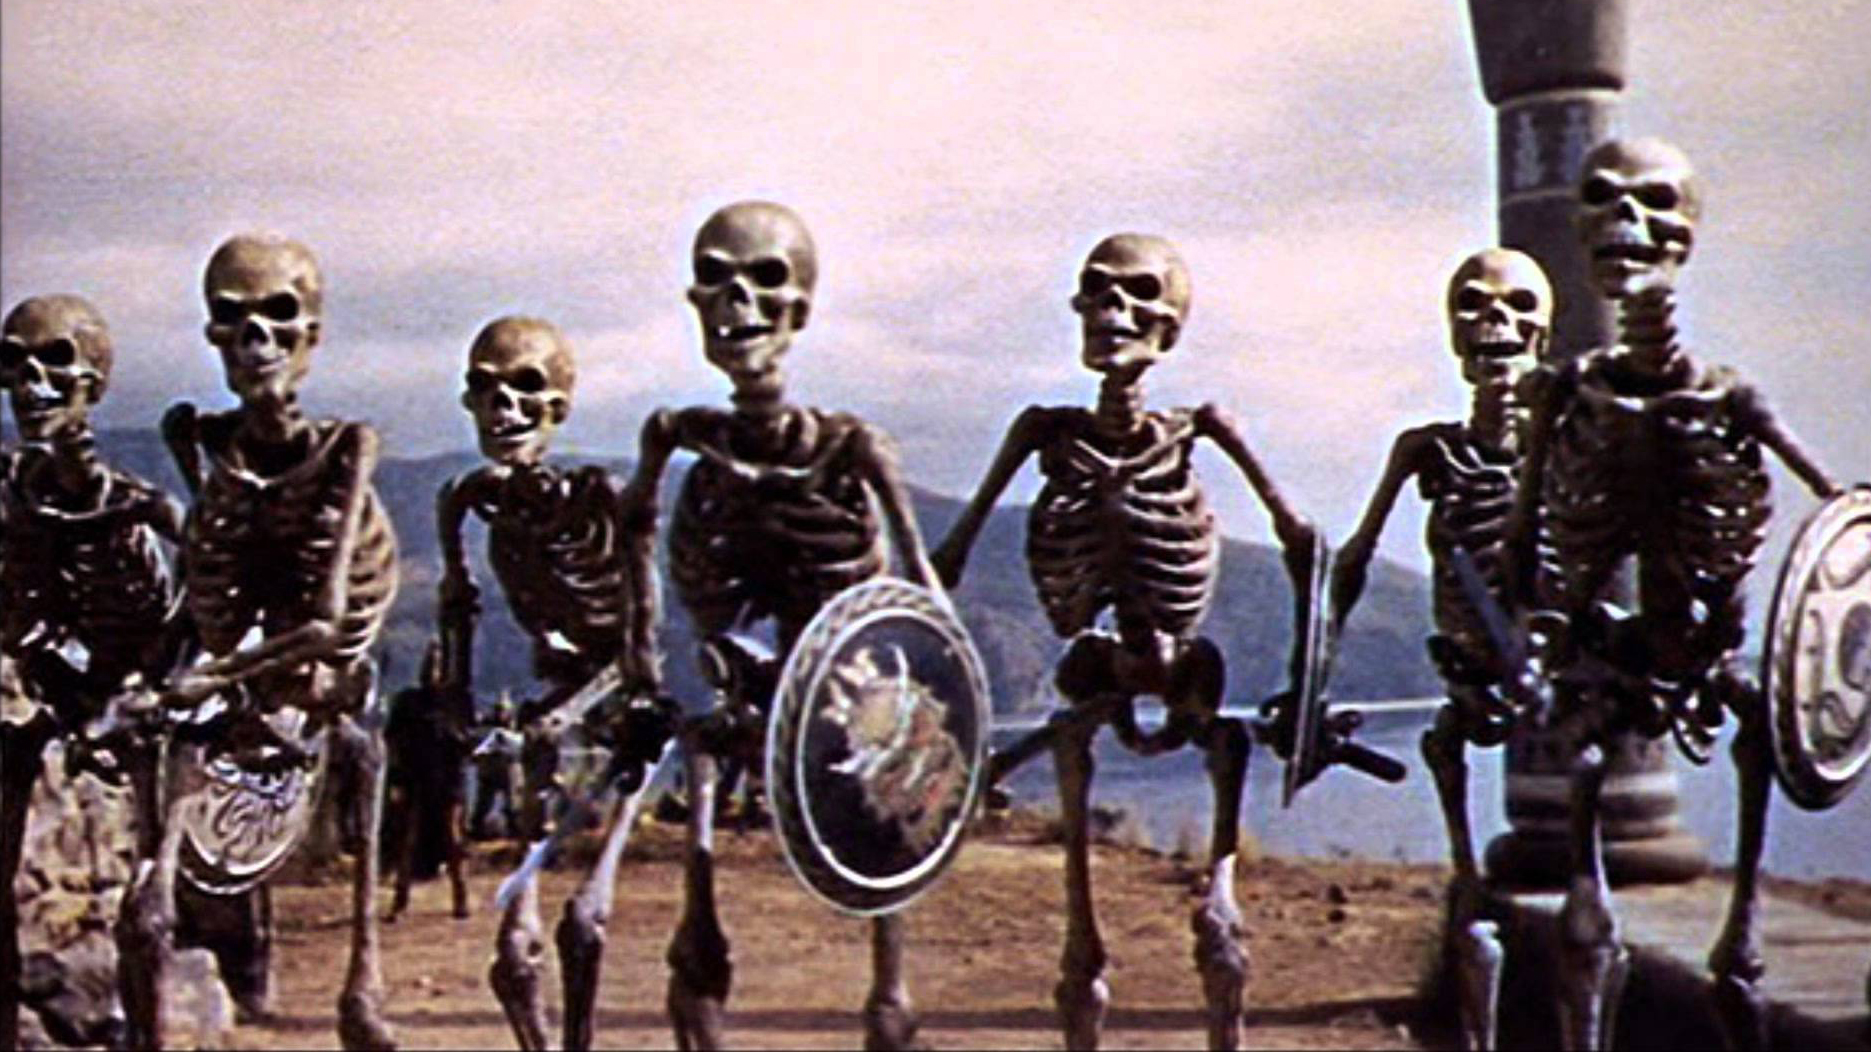 Ray Harryhausen skeletons